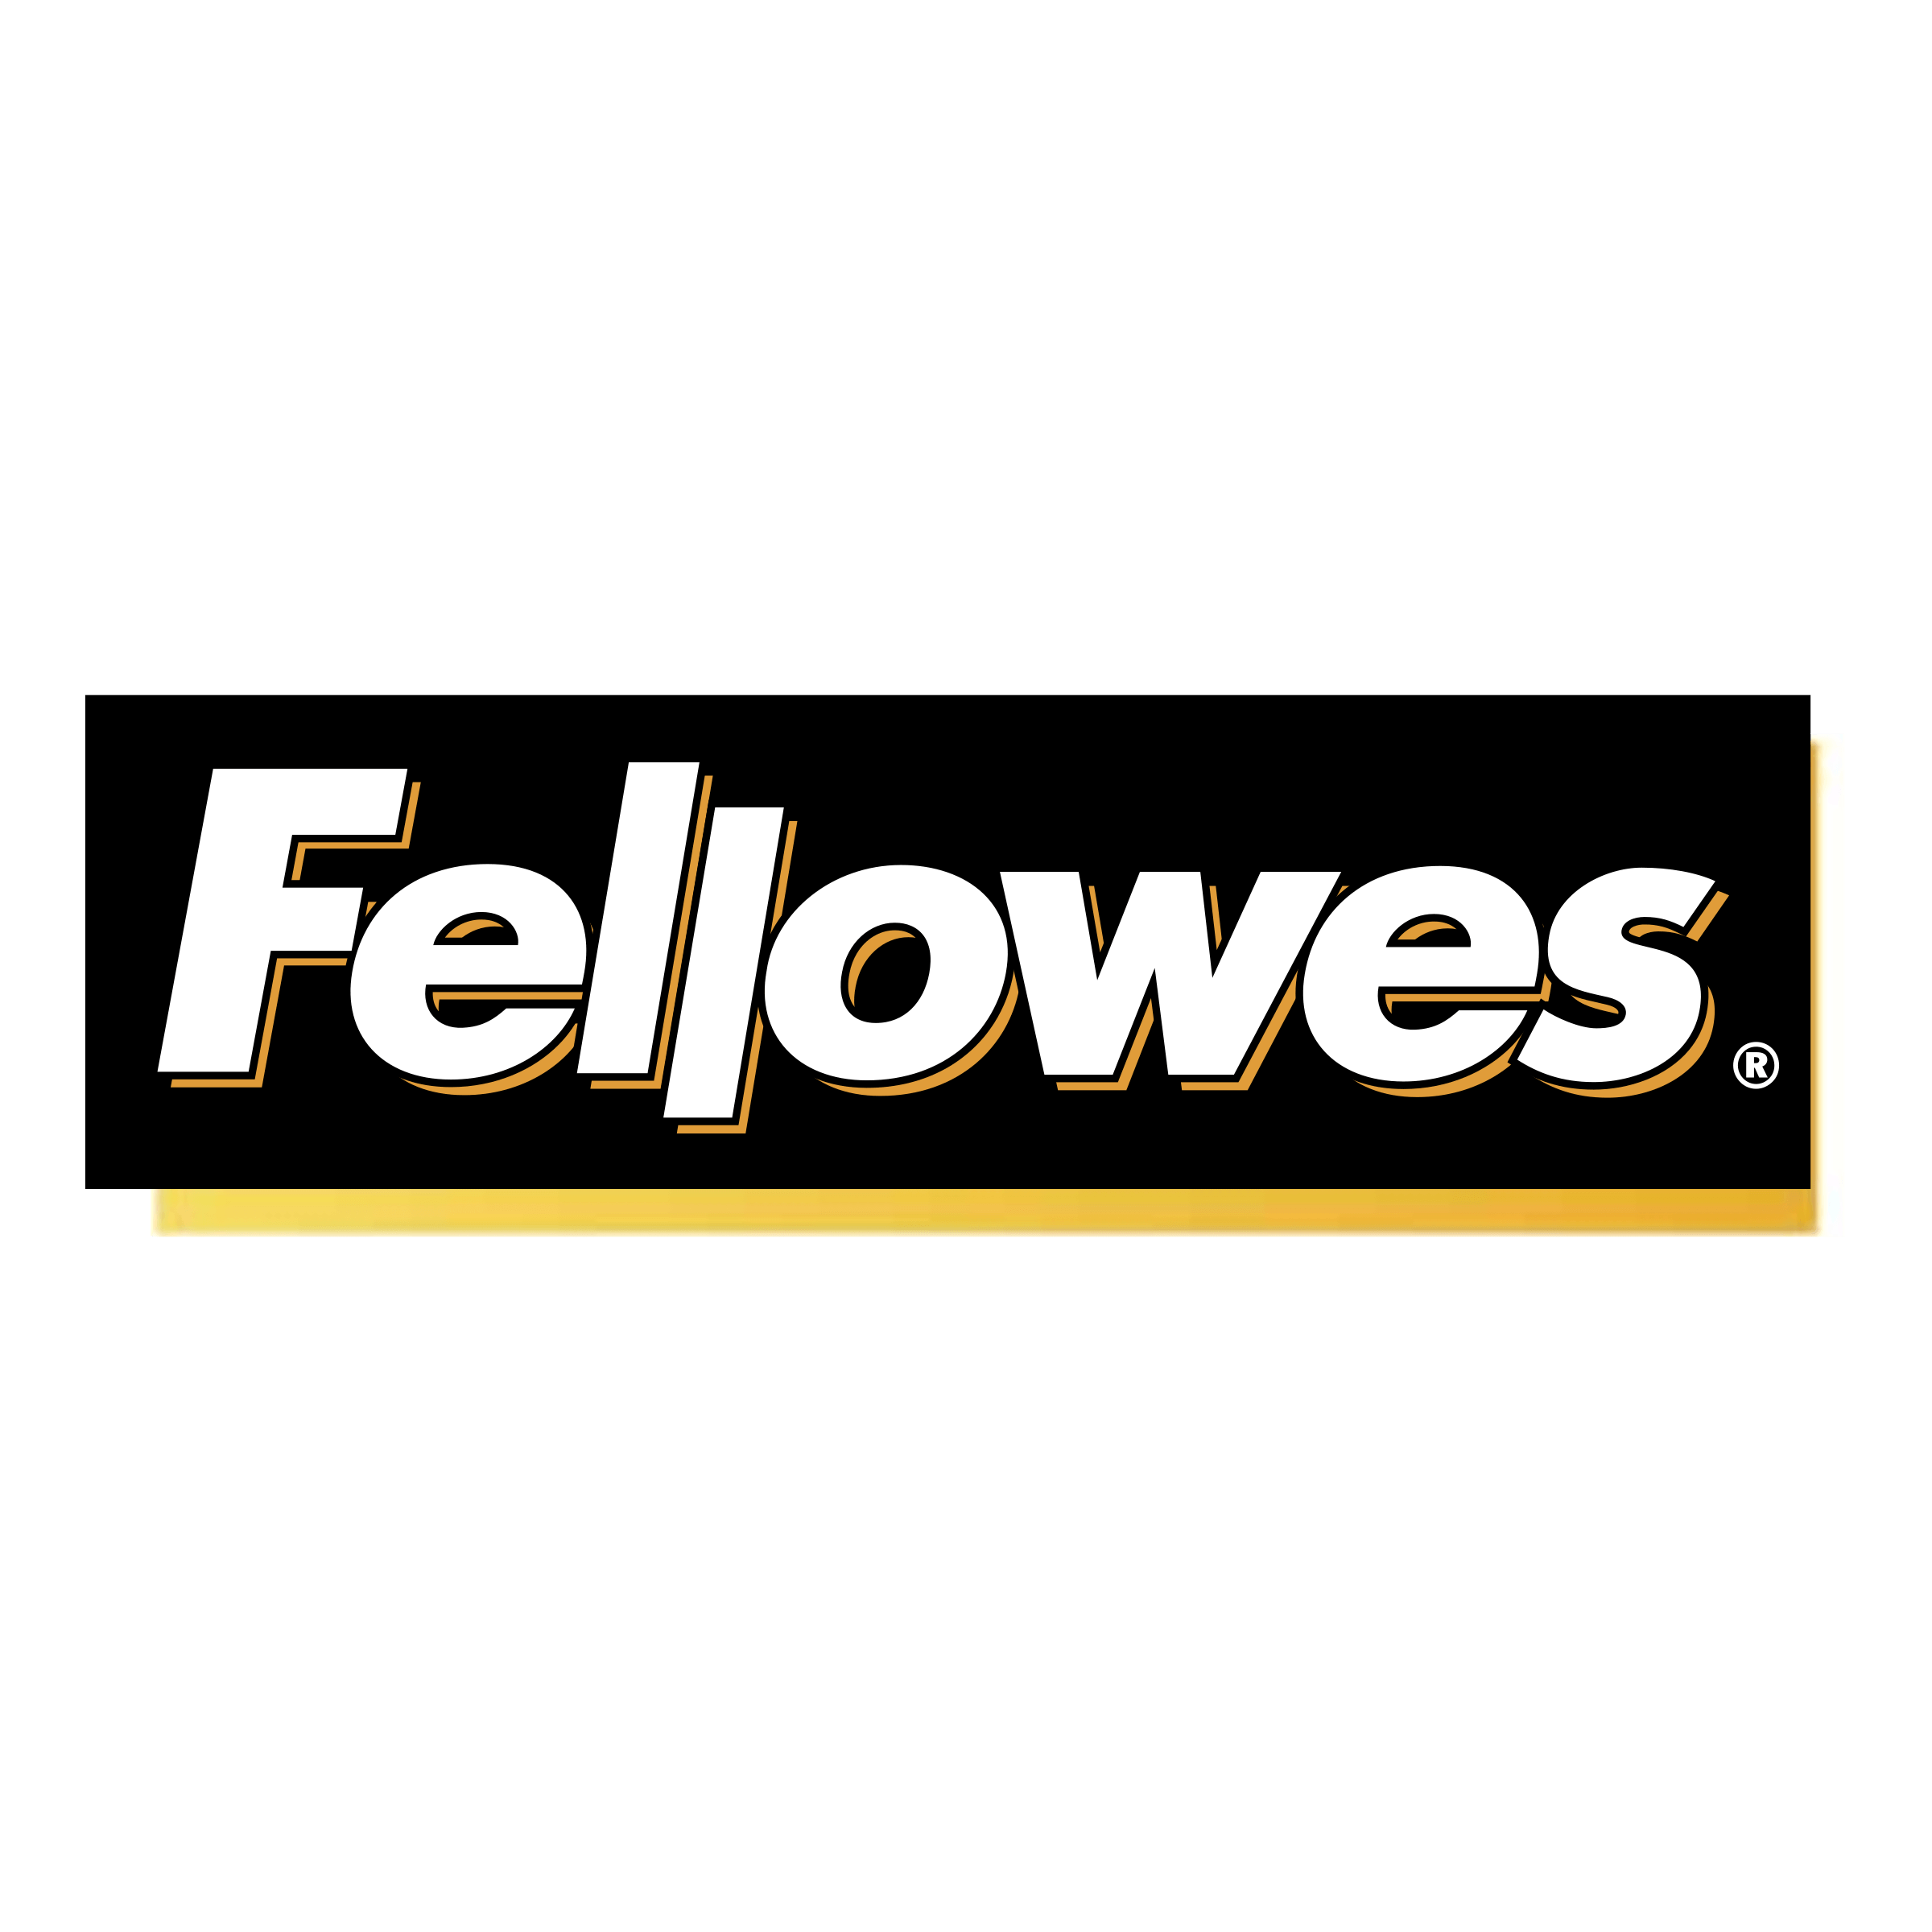 Fellowes Logo - Fellowes Logo PNG Transparent & SVG Vector